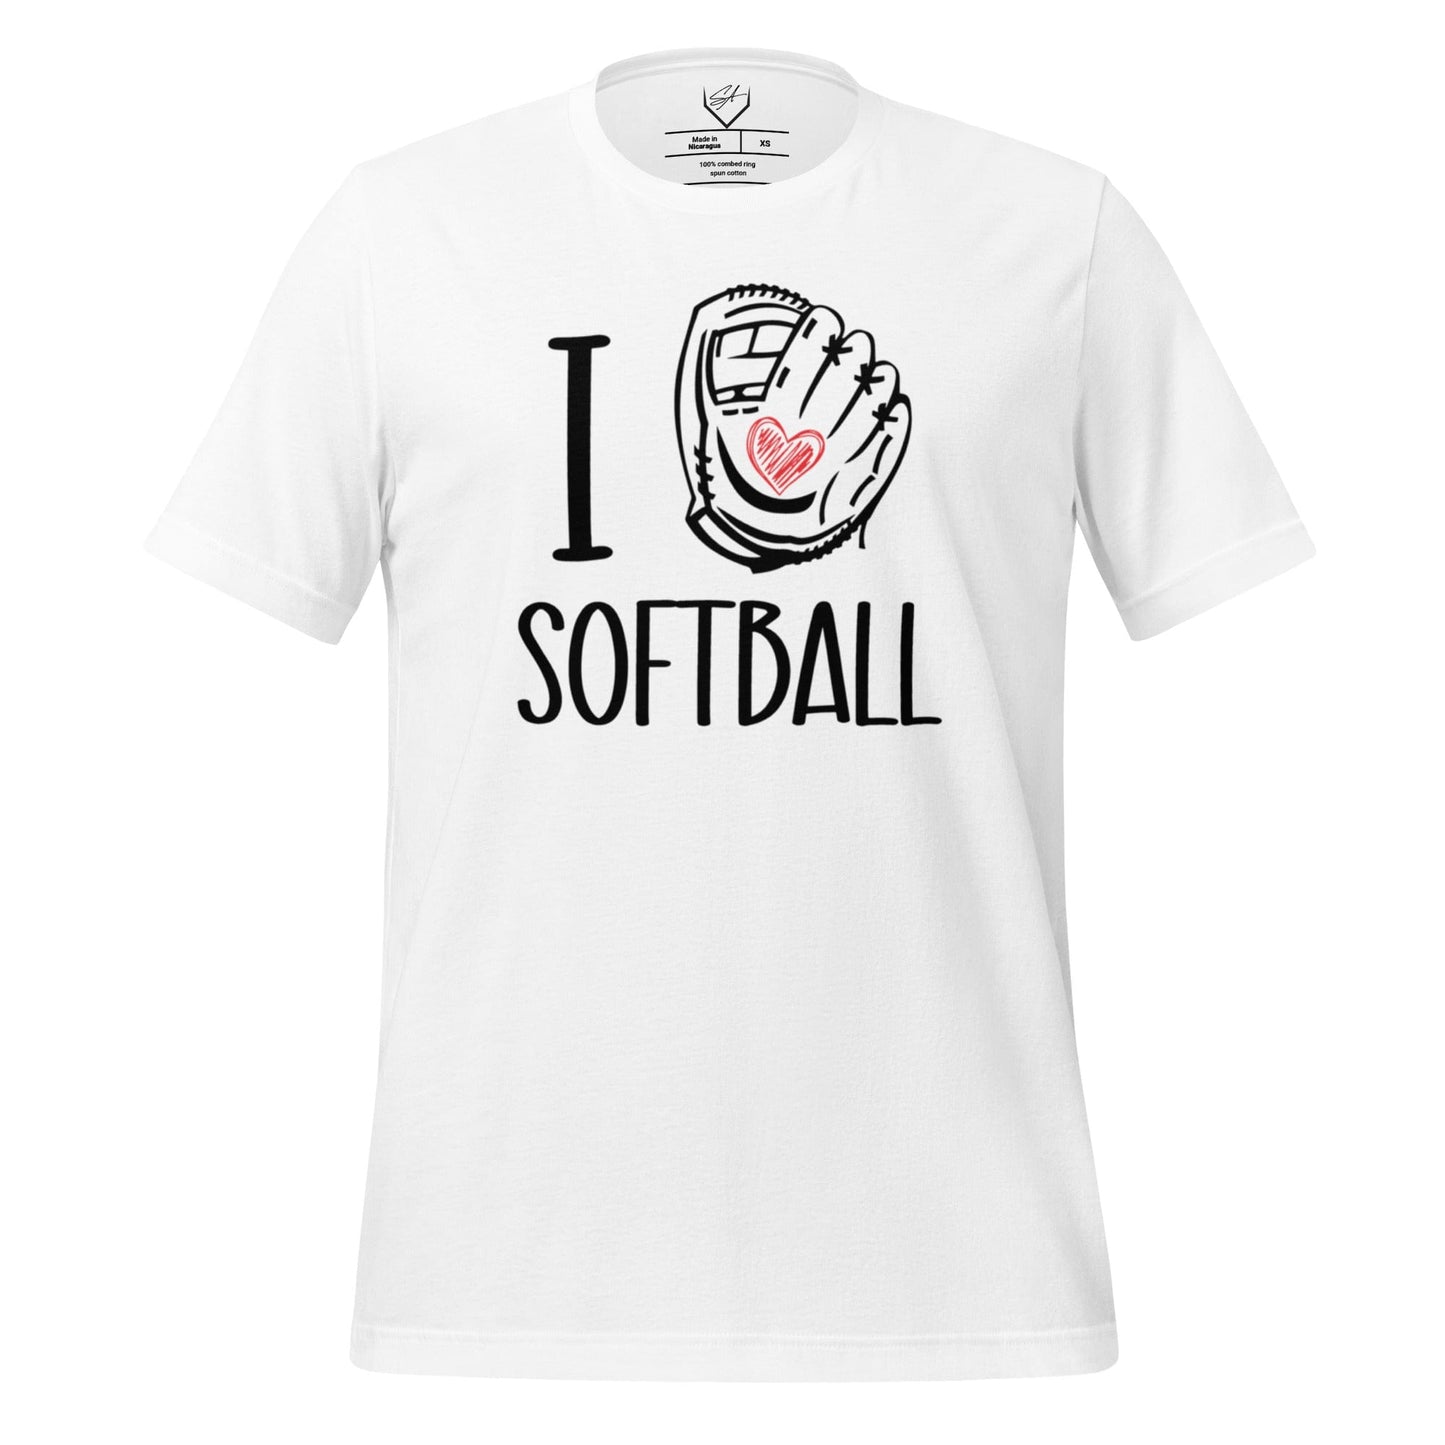 I Glove Softball - Adult Tee